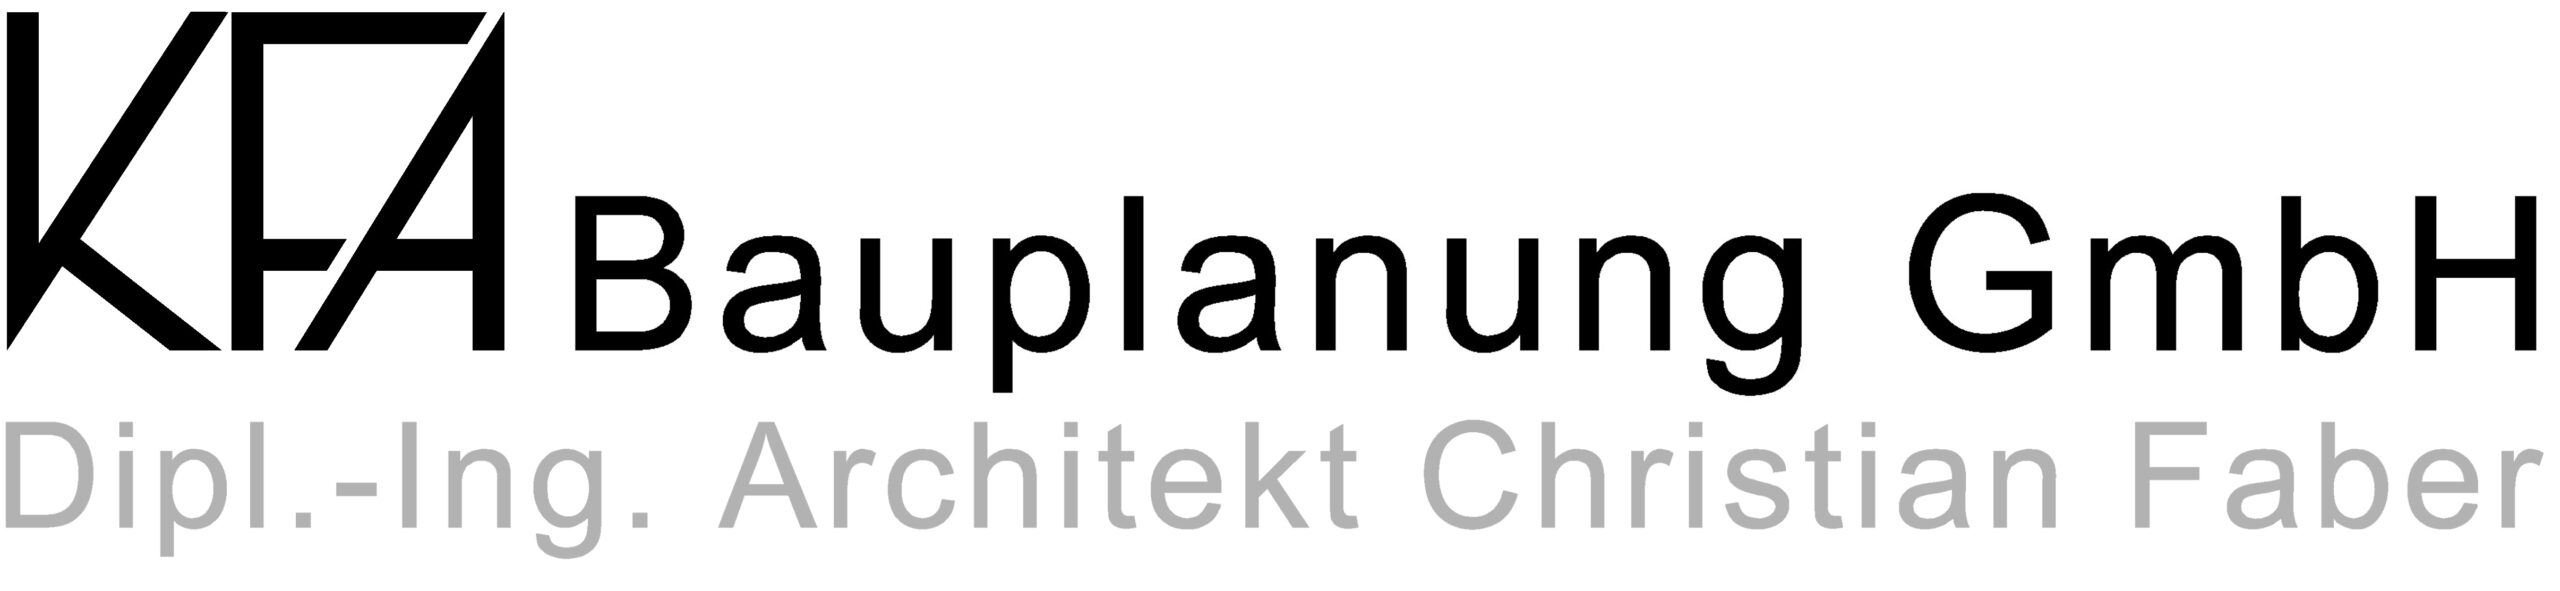 KFA Bauplanung GmbH